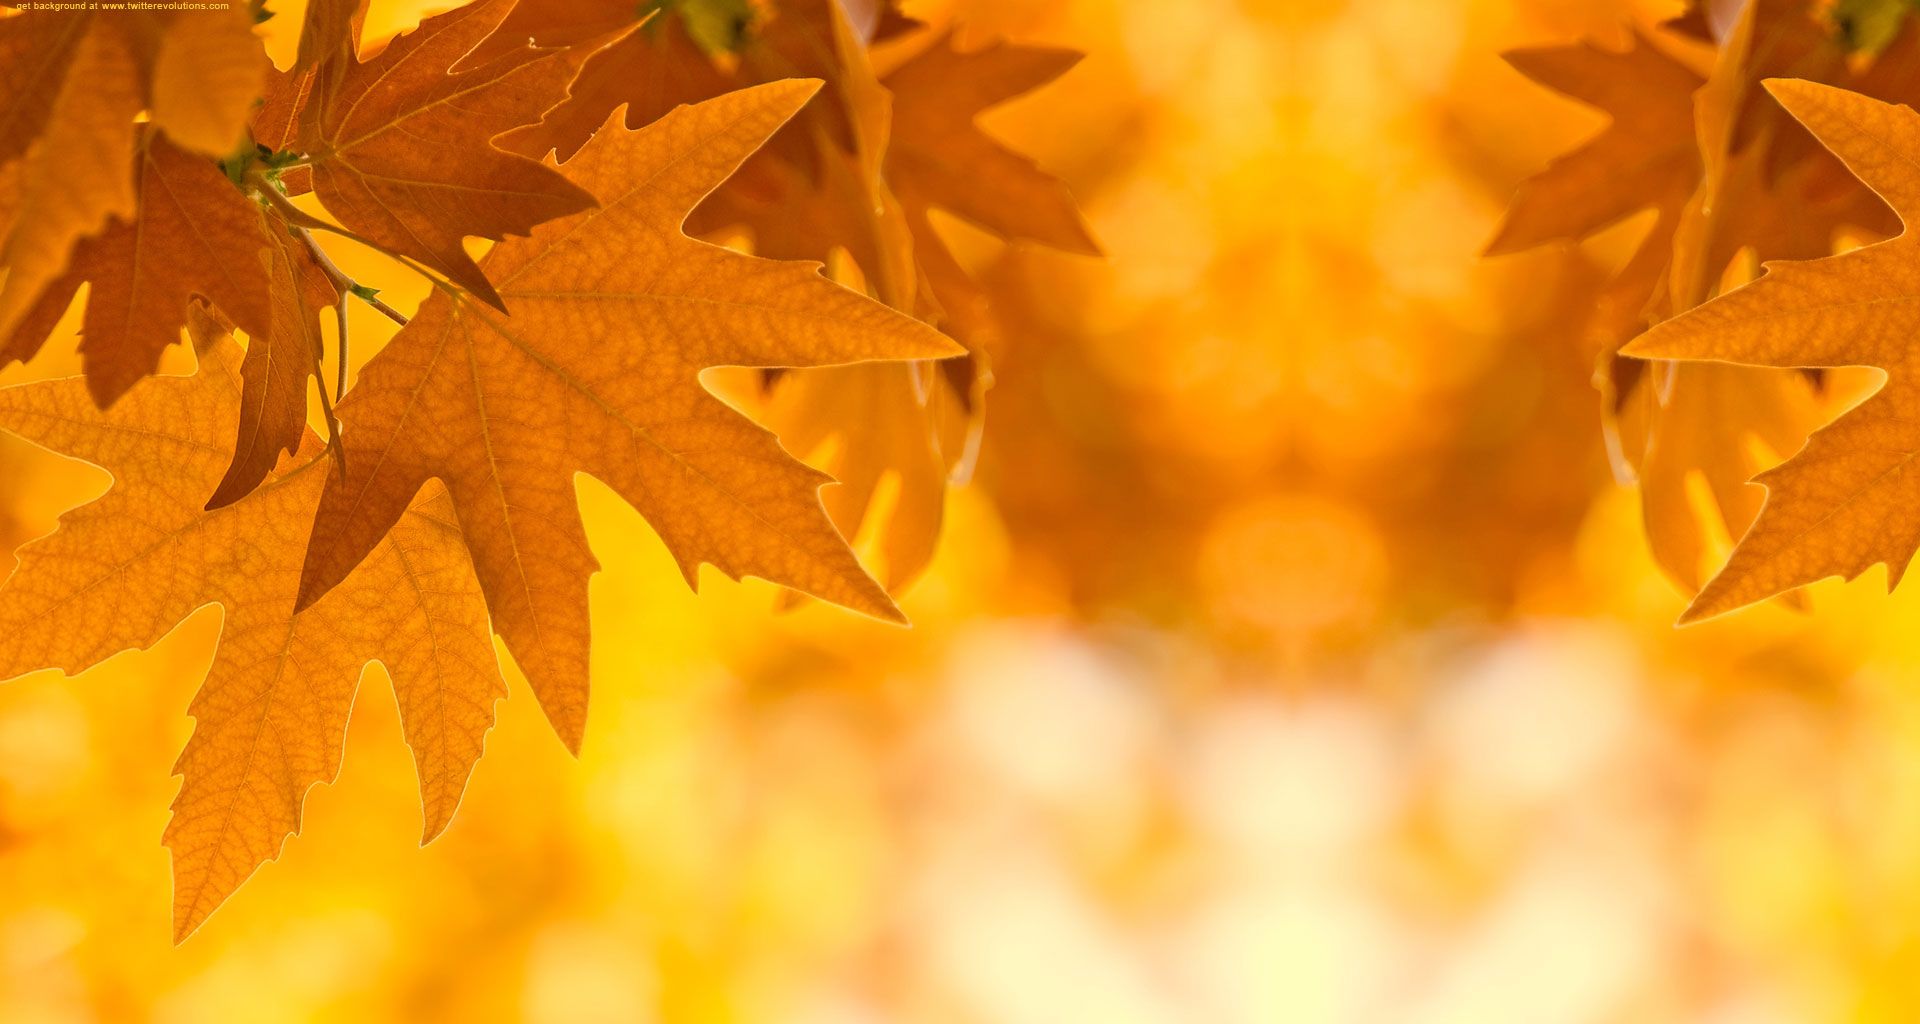 Autumn Leaves Background Tumblr - wallpaper